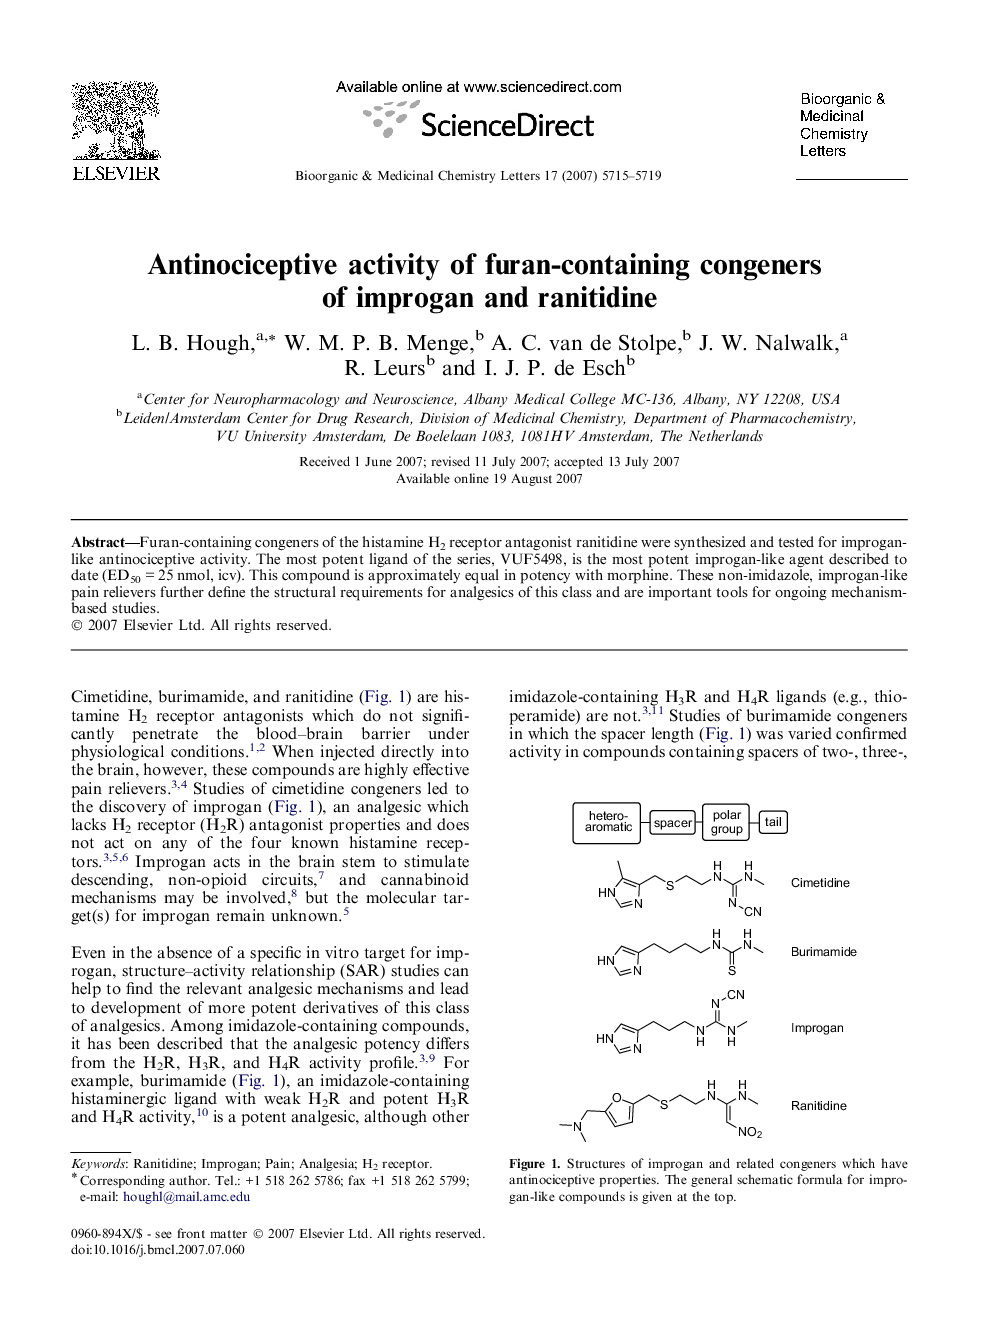 Antinociceptive activity of furan-containing congeners of improgan and ranitidine